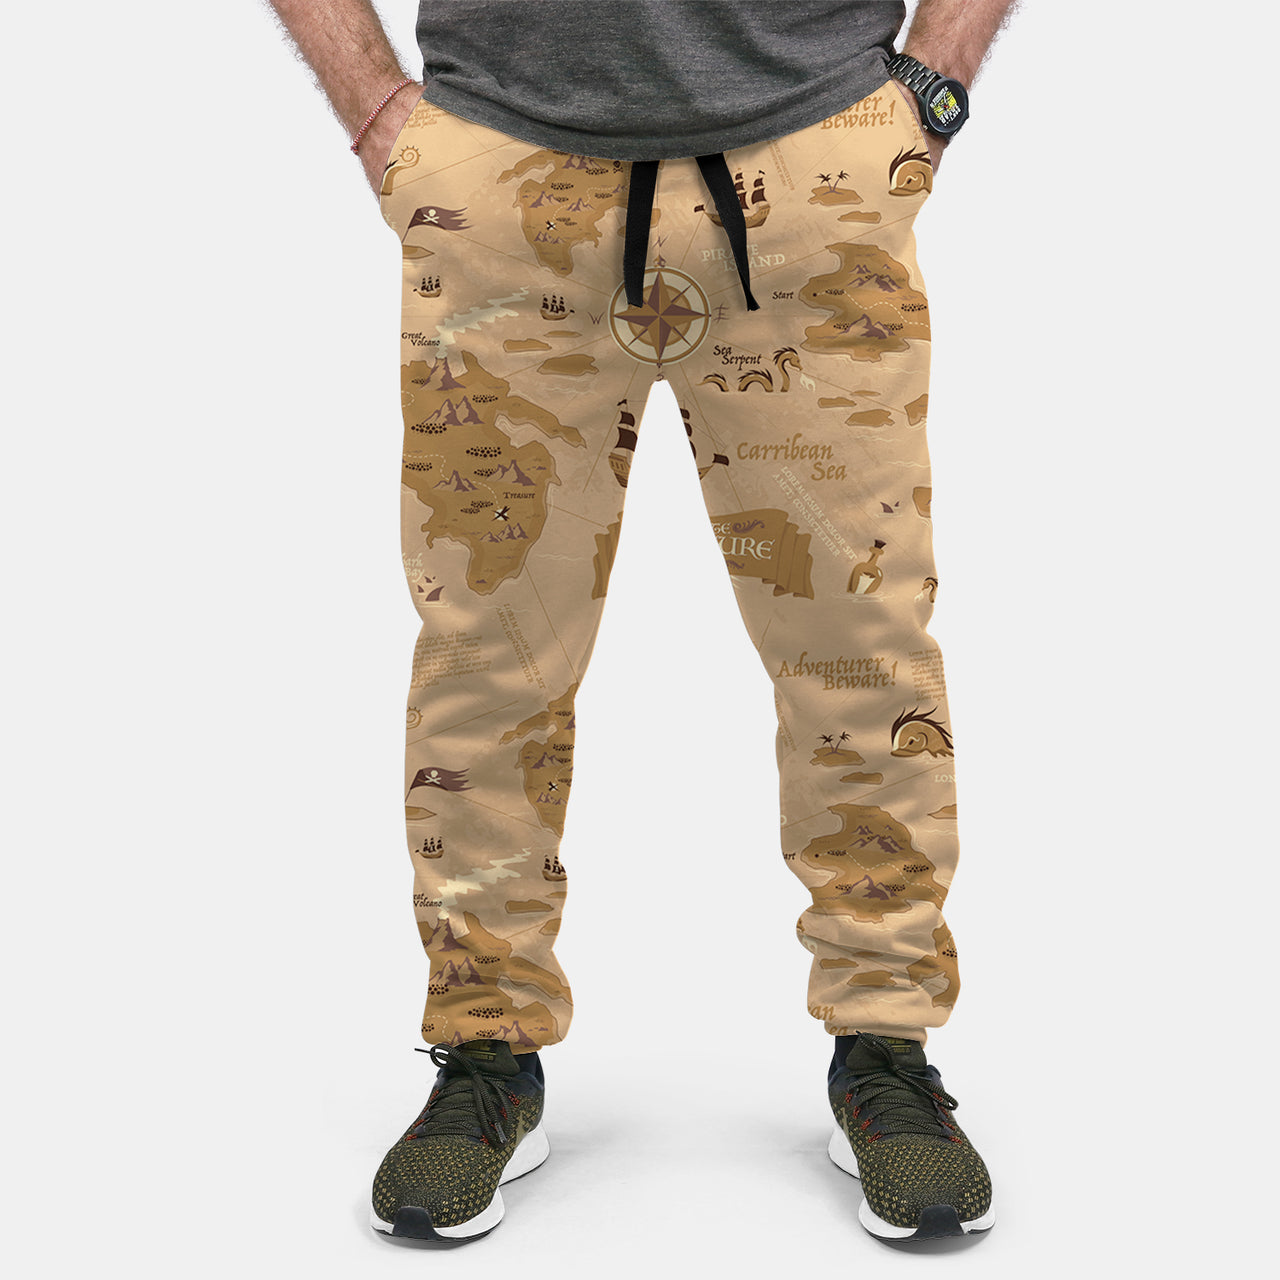 Adventurer Designed Sweat Pants & Trousers